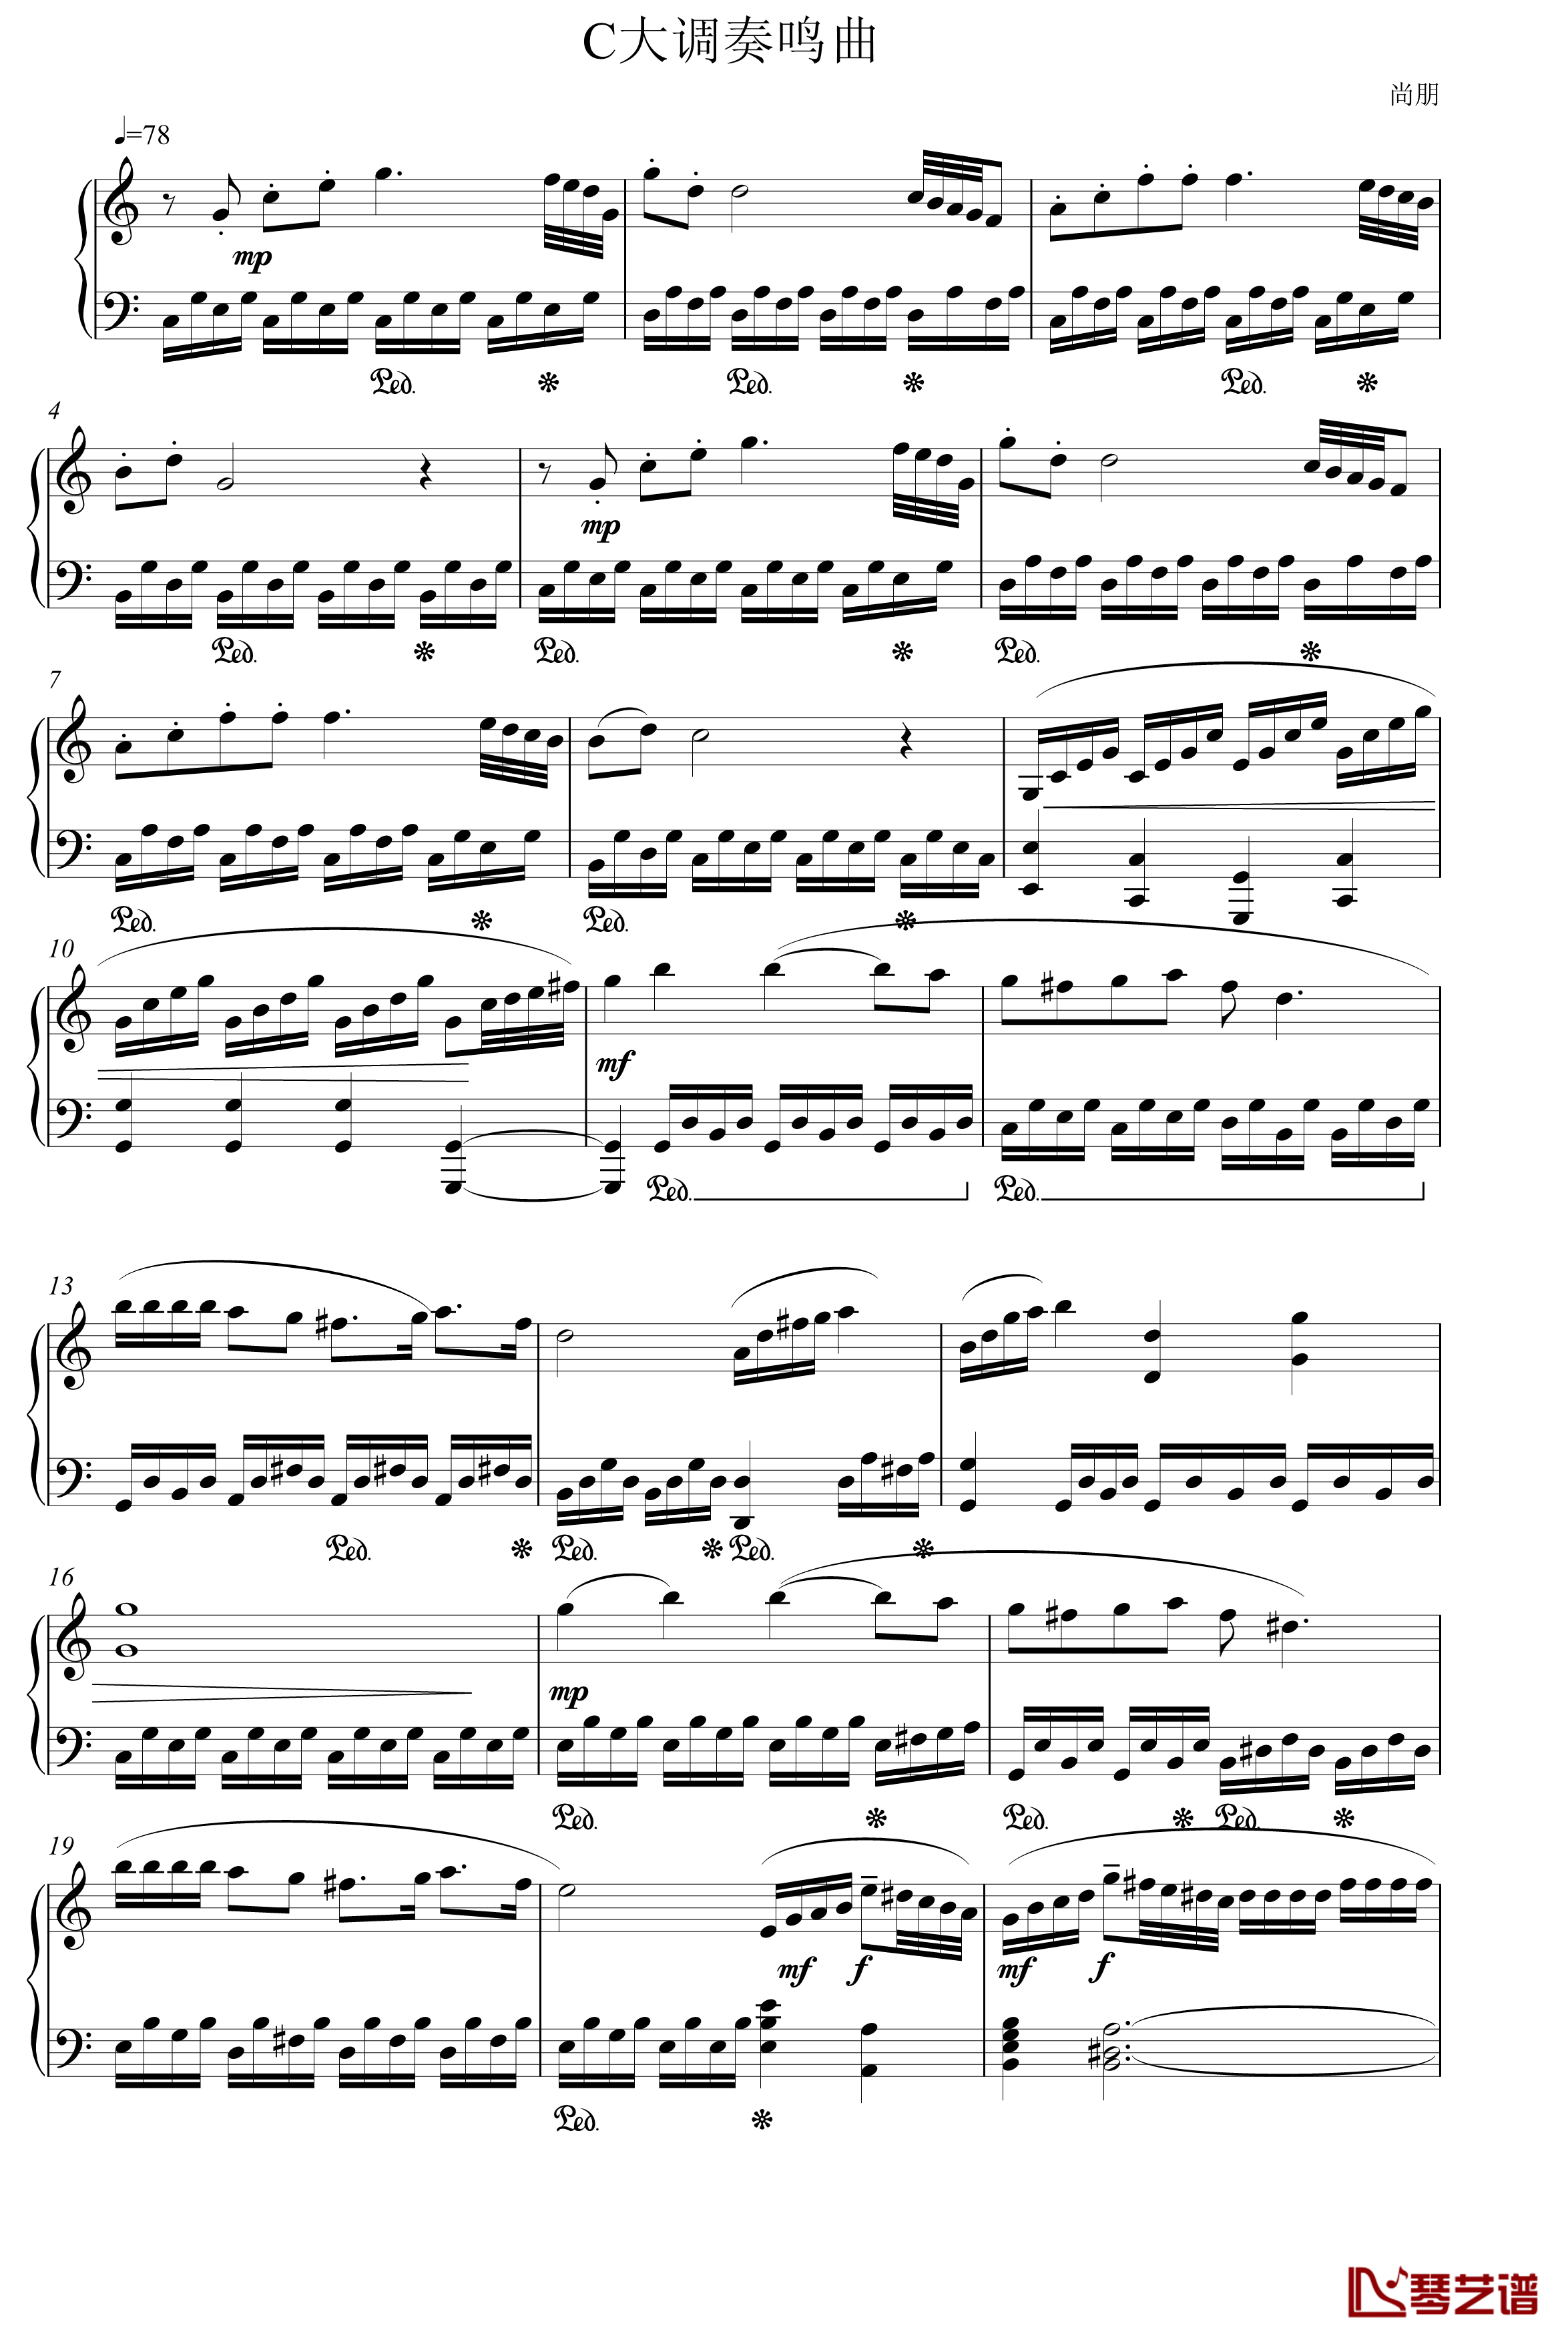 C大调奏鸣曲钢琴谱-第一乐章-尚朋1